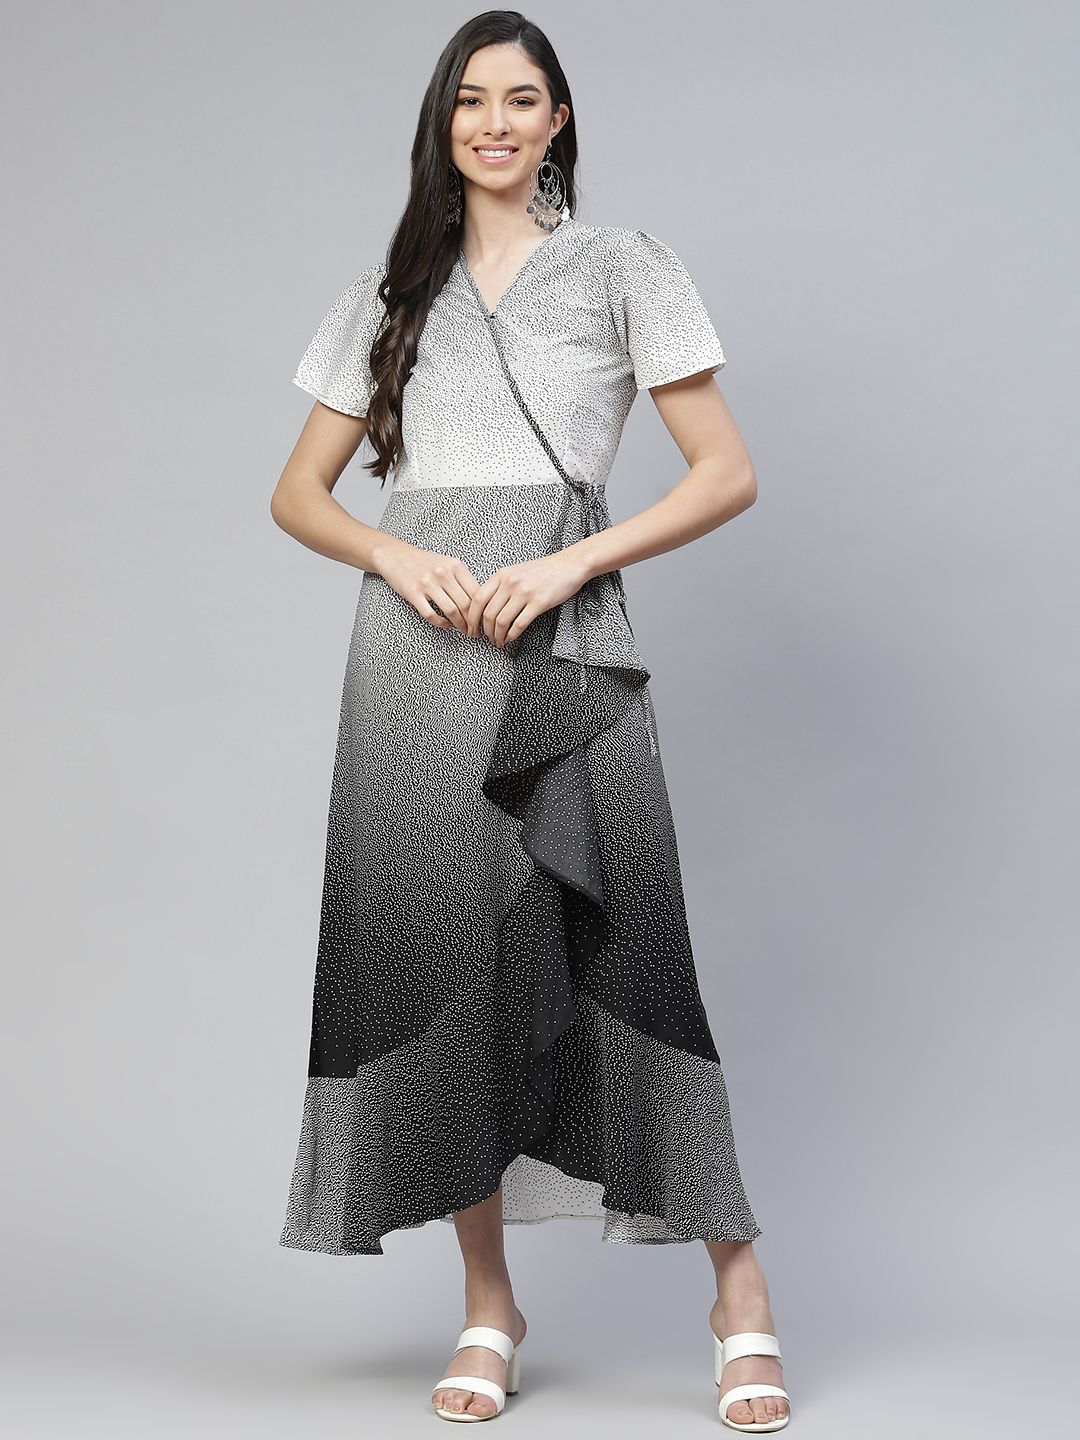 Cottinfab White & Black Ditsy Geometric Print A-Line Midi Dress Price in India